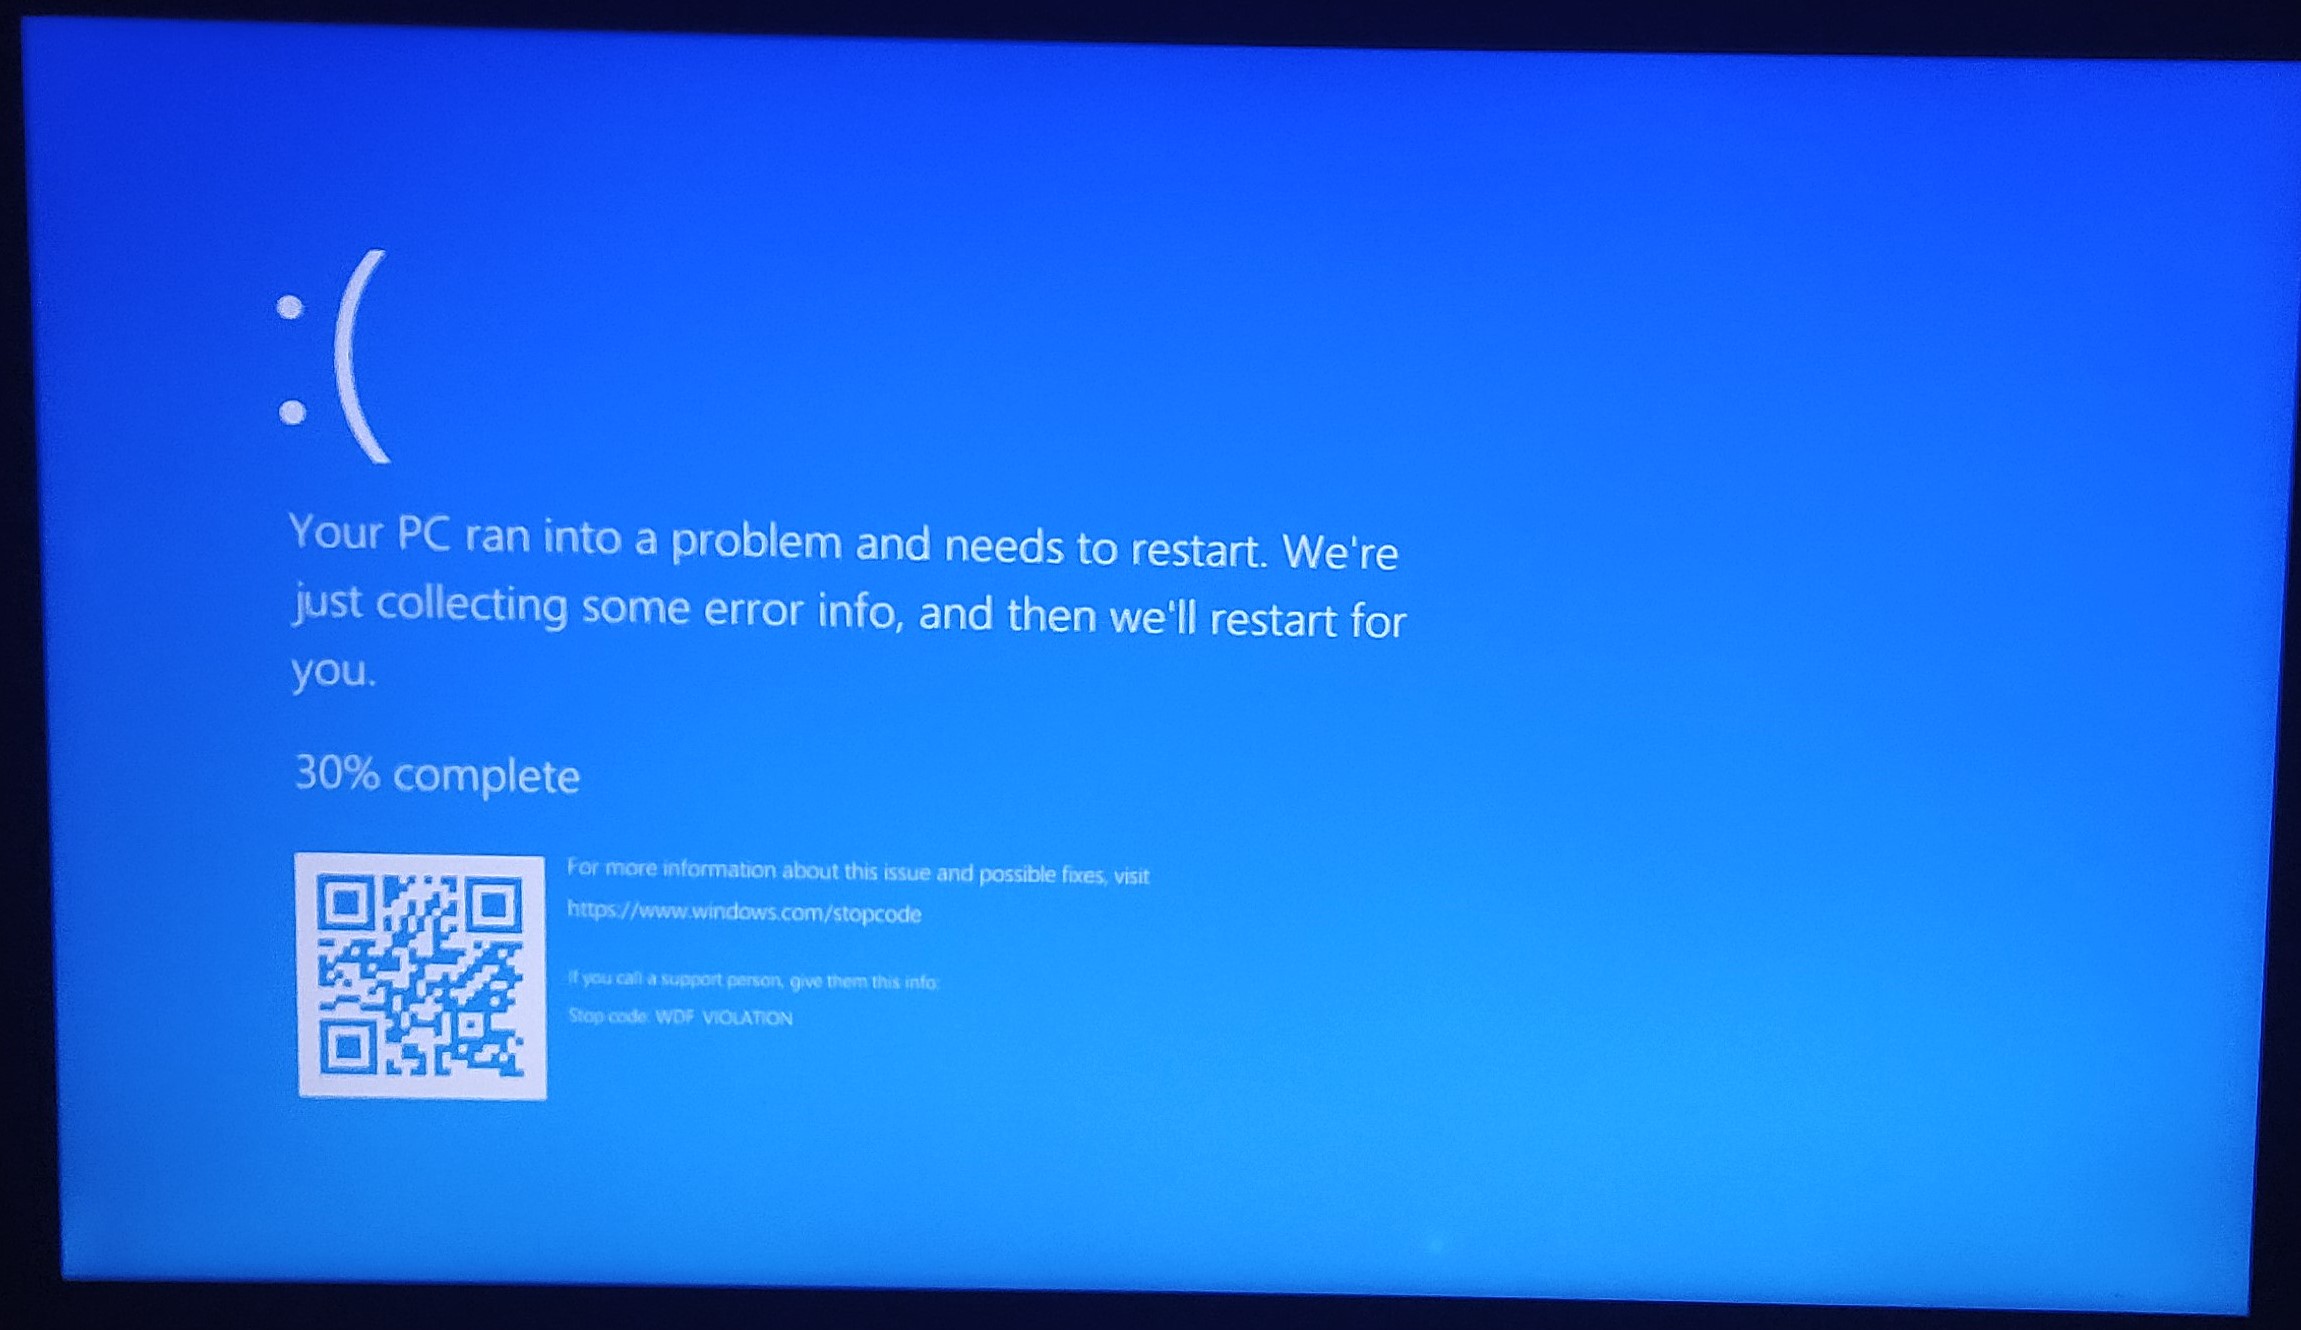 Bsod While Using Hp Laptop Windows 10 V1909 Microsoft Community